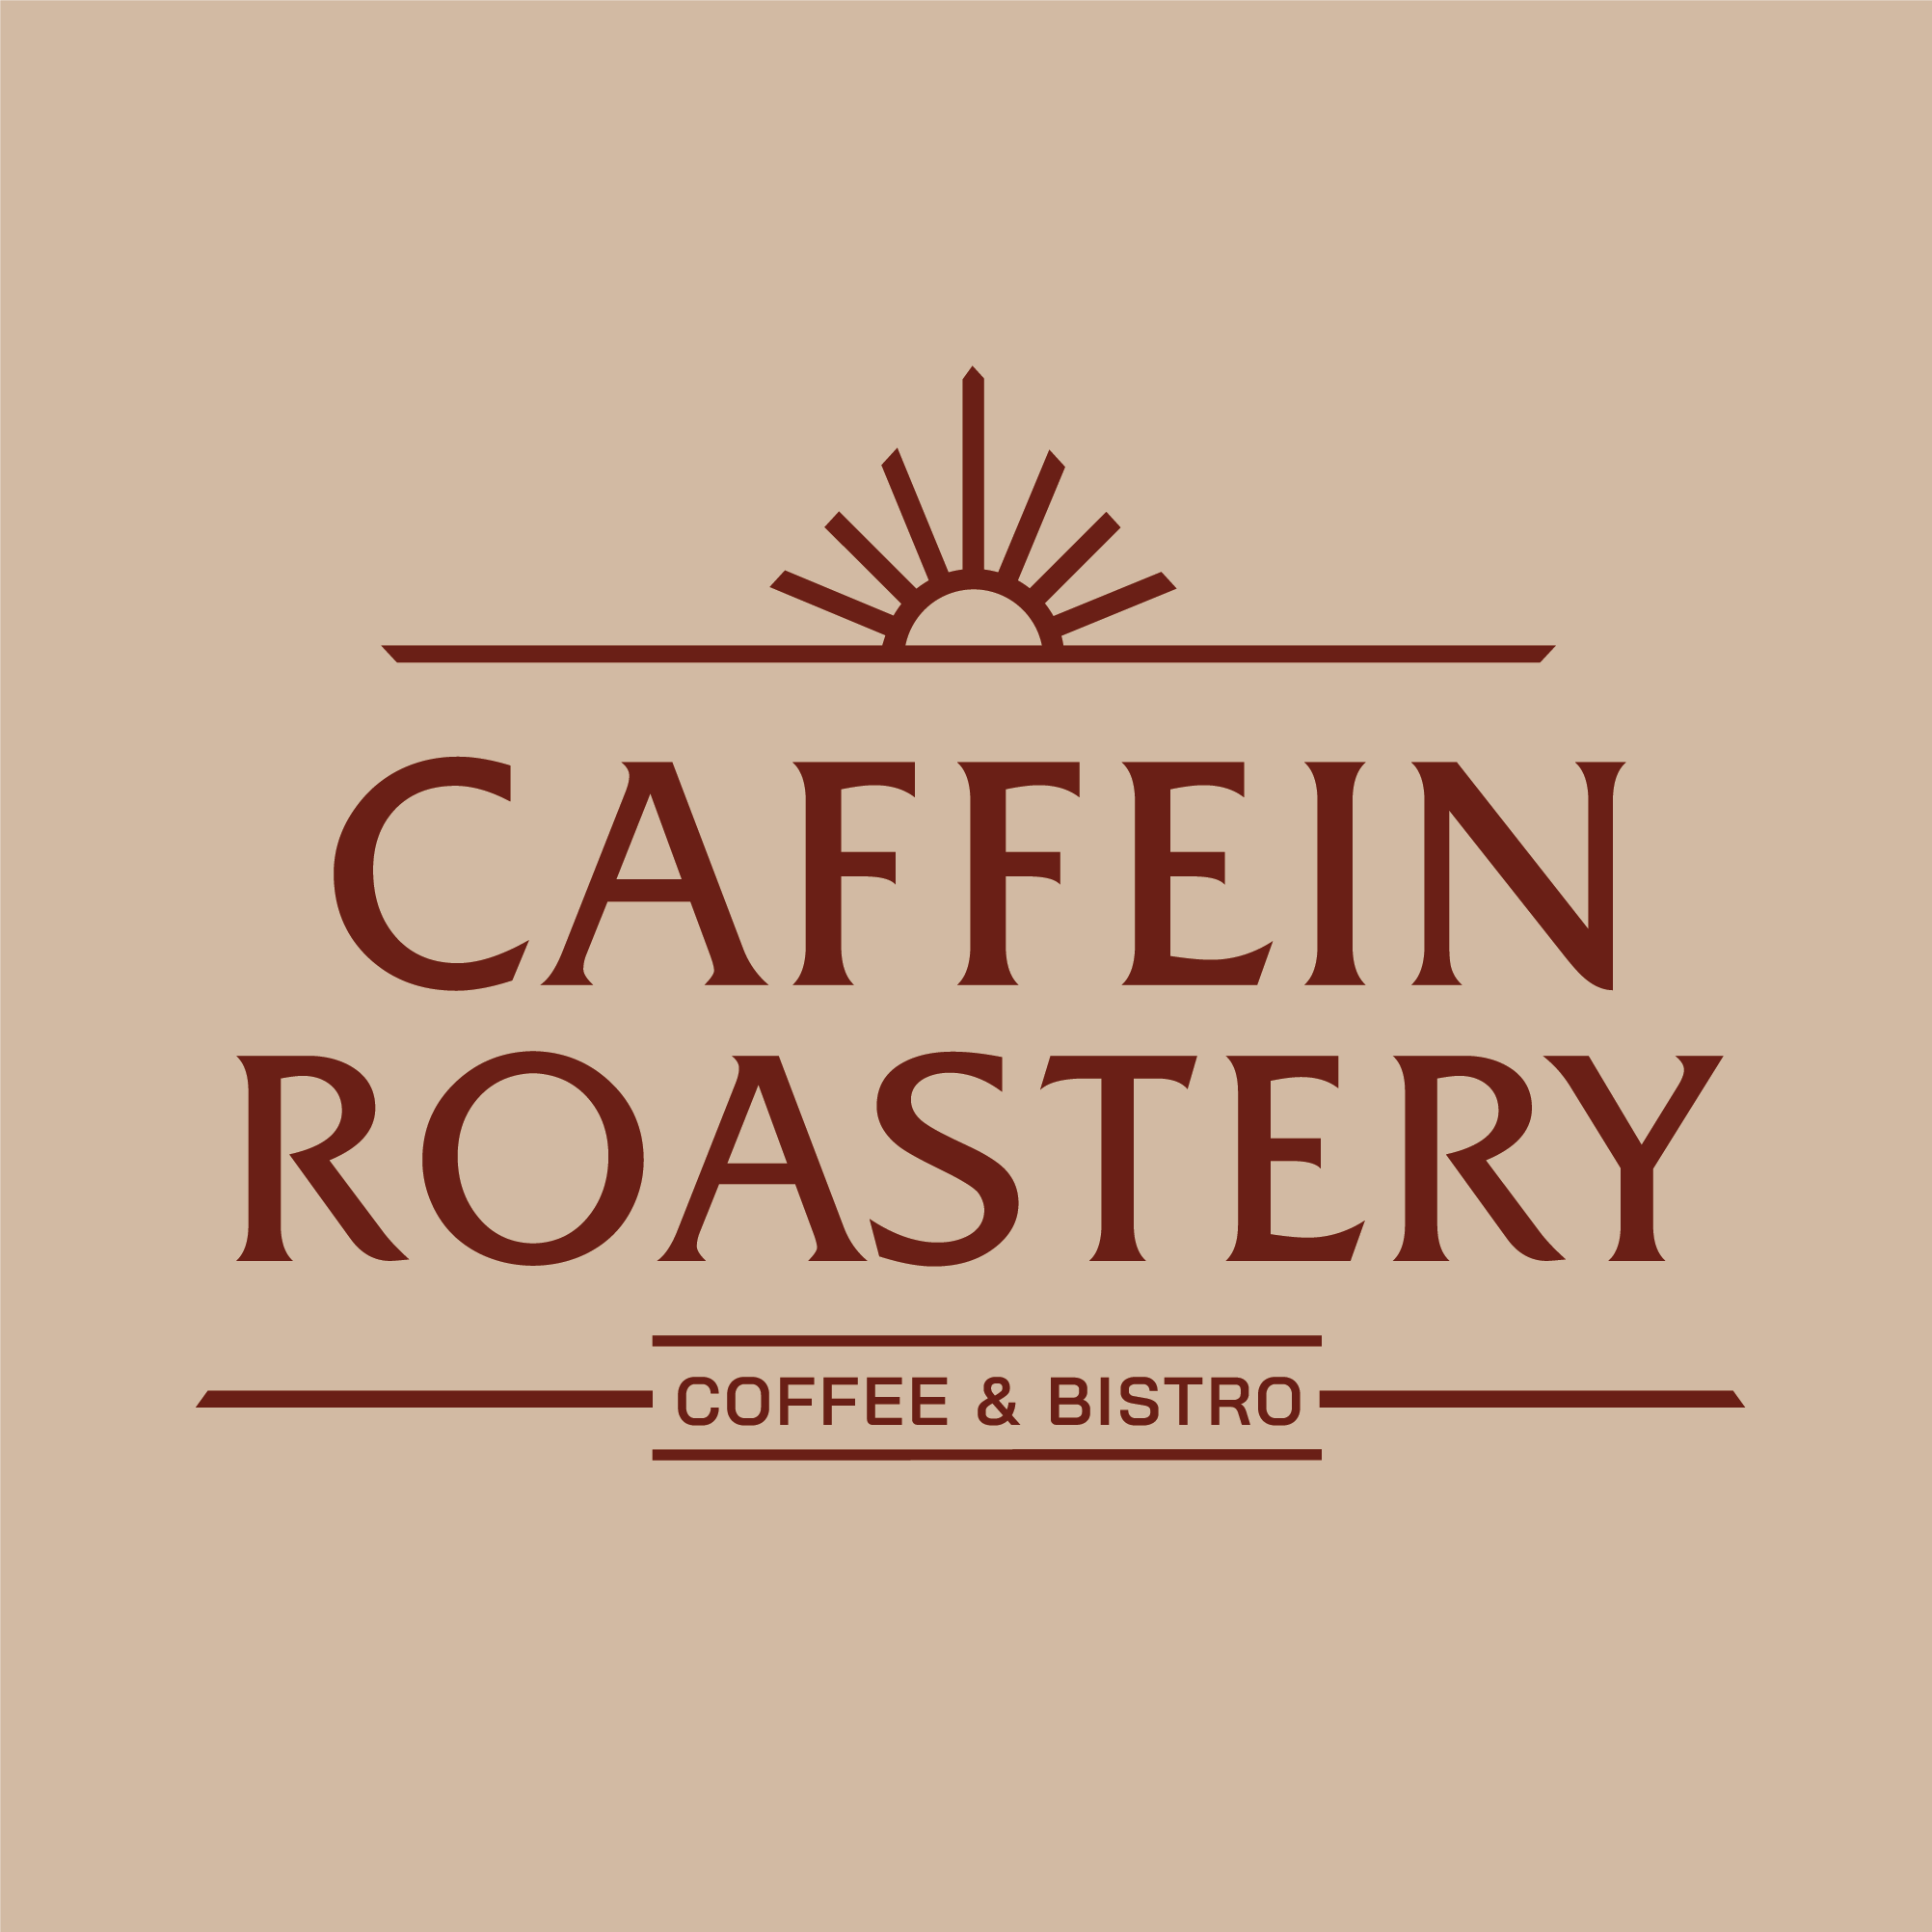 CAFFEIN ROASTERY COFFEE & BISTRO